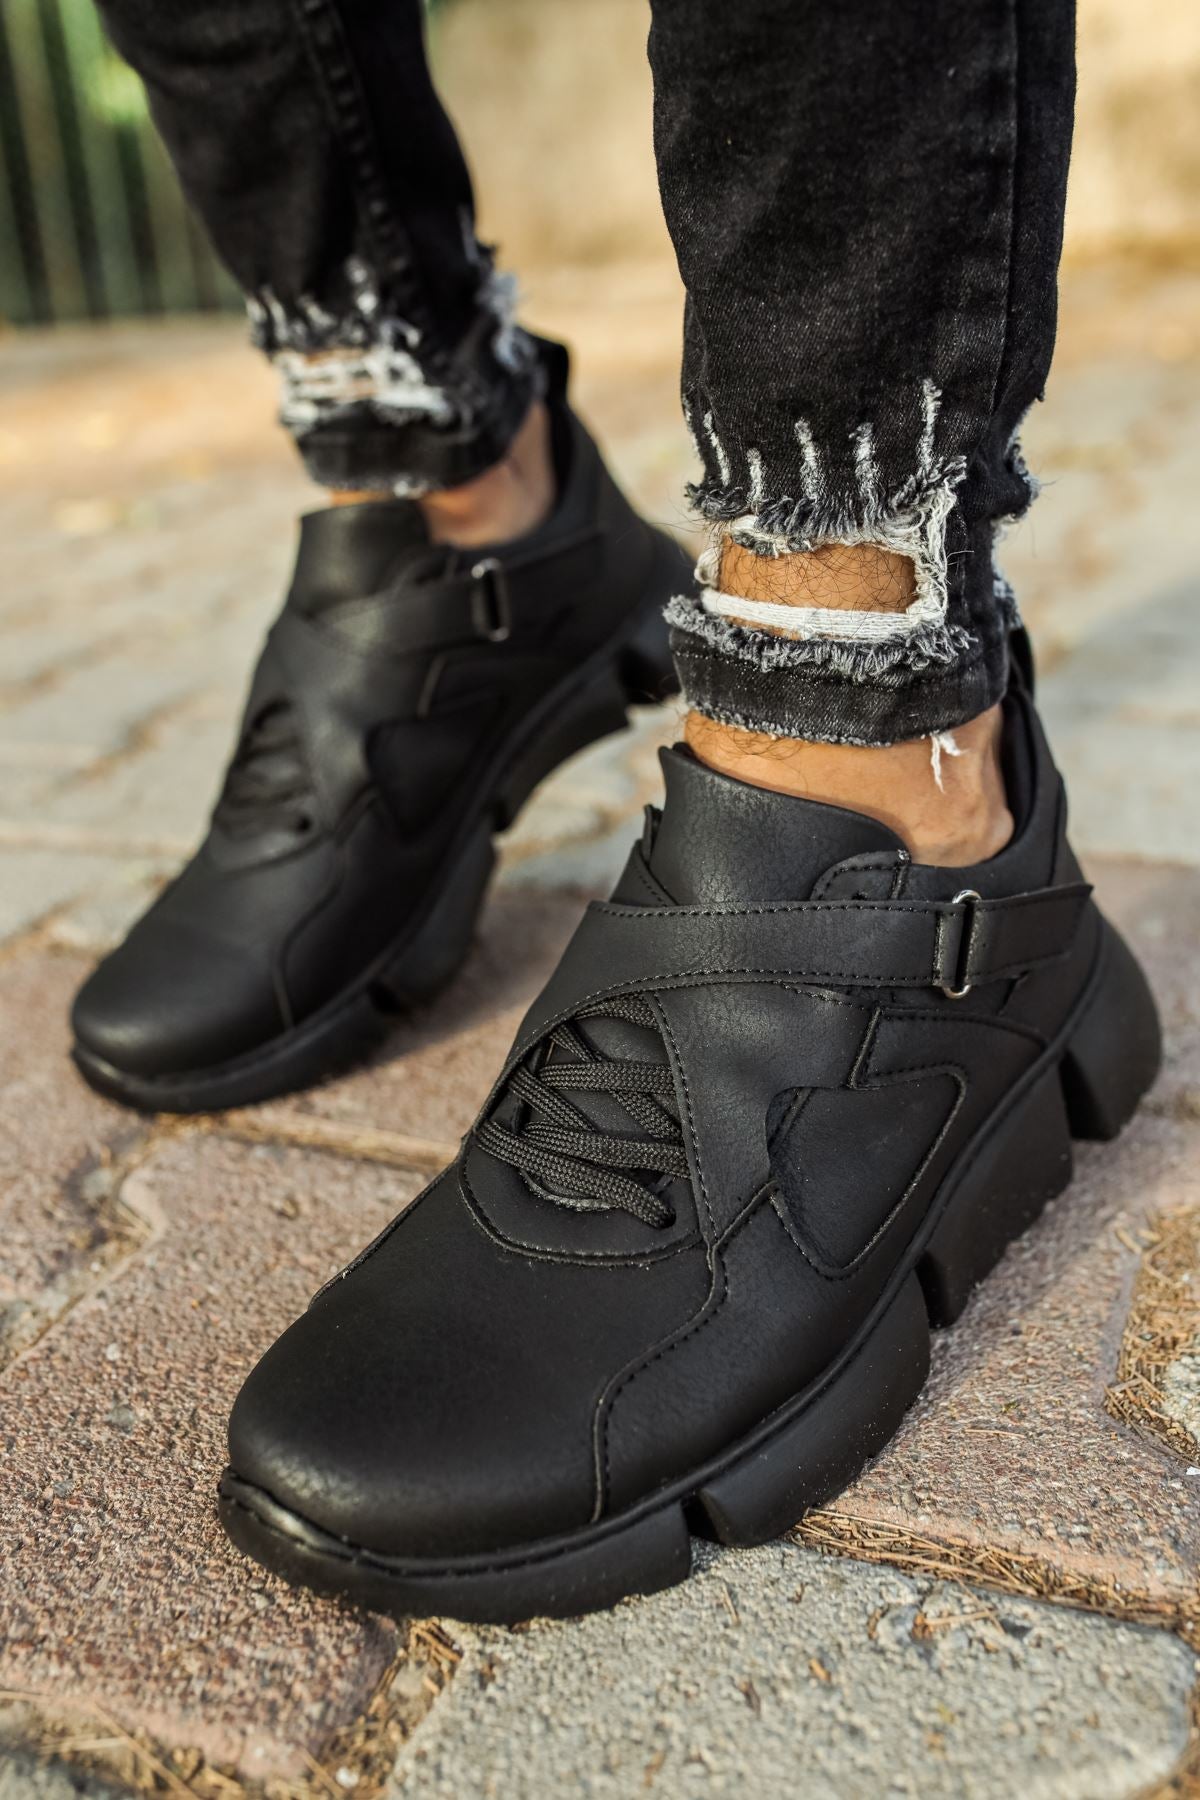 CH071 Men's Full Black Casual Sneaker Sports Shoes